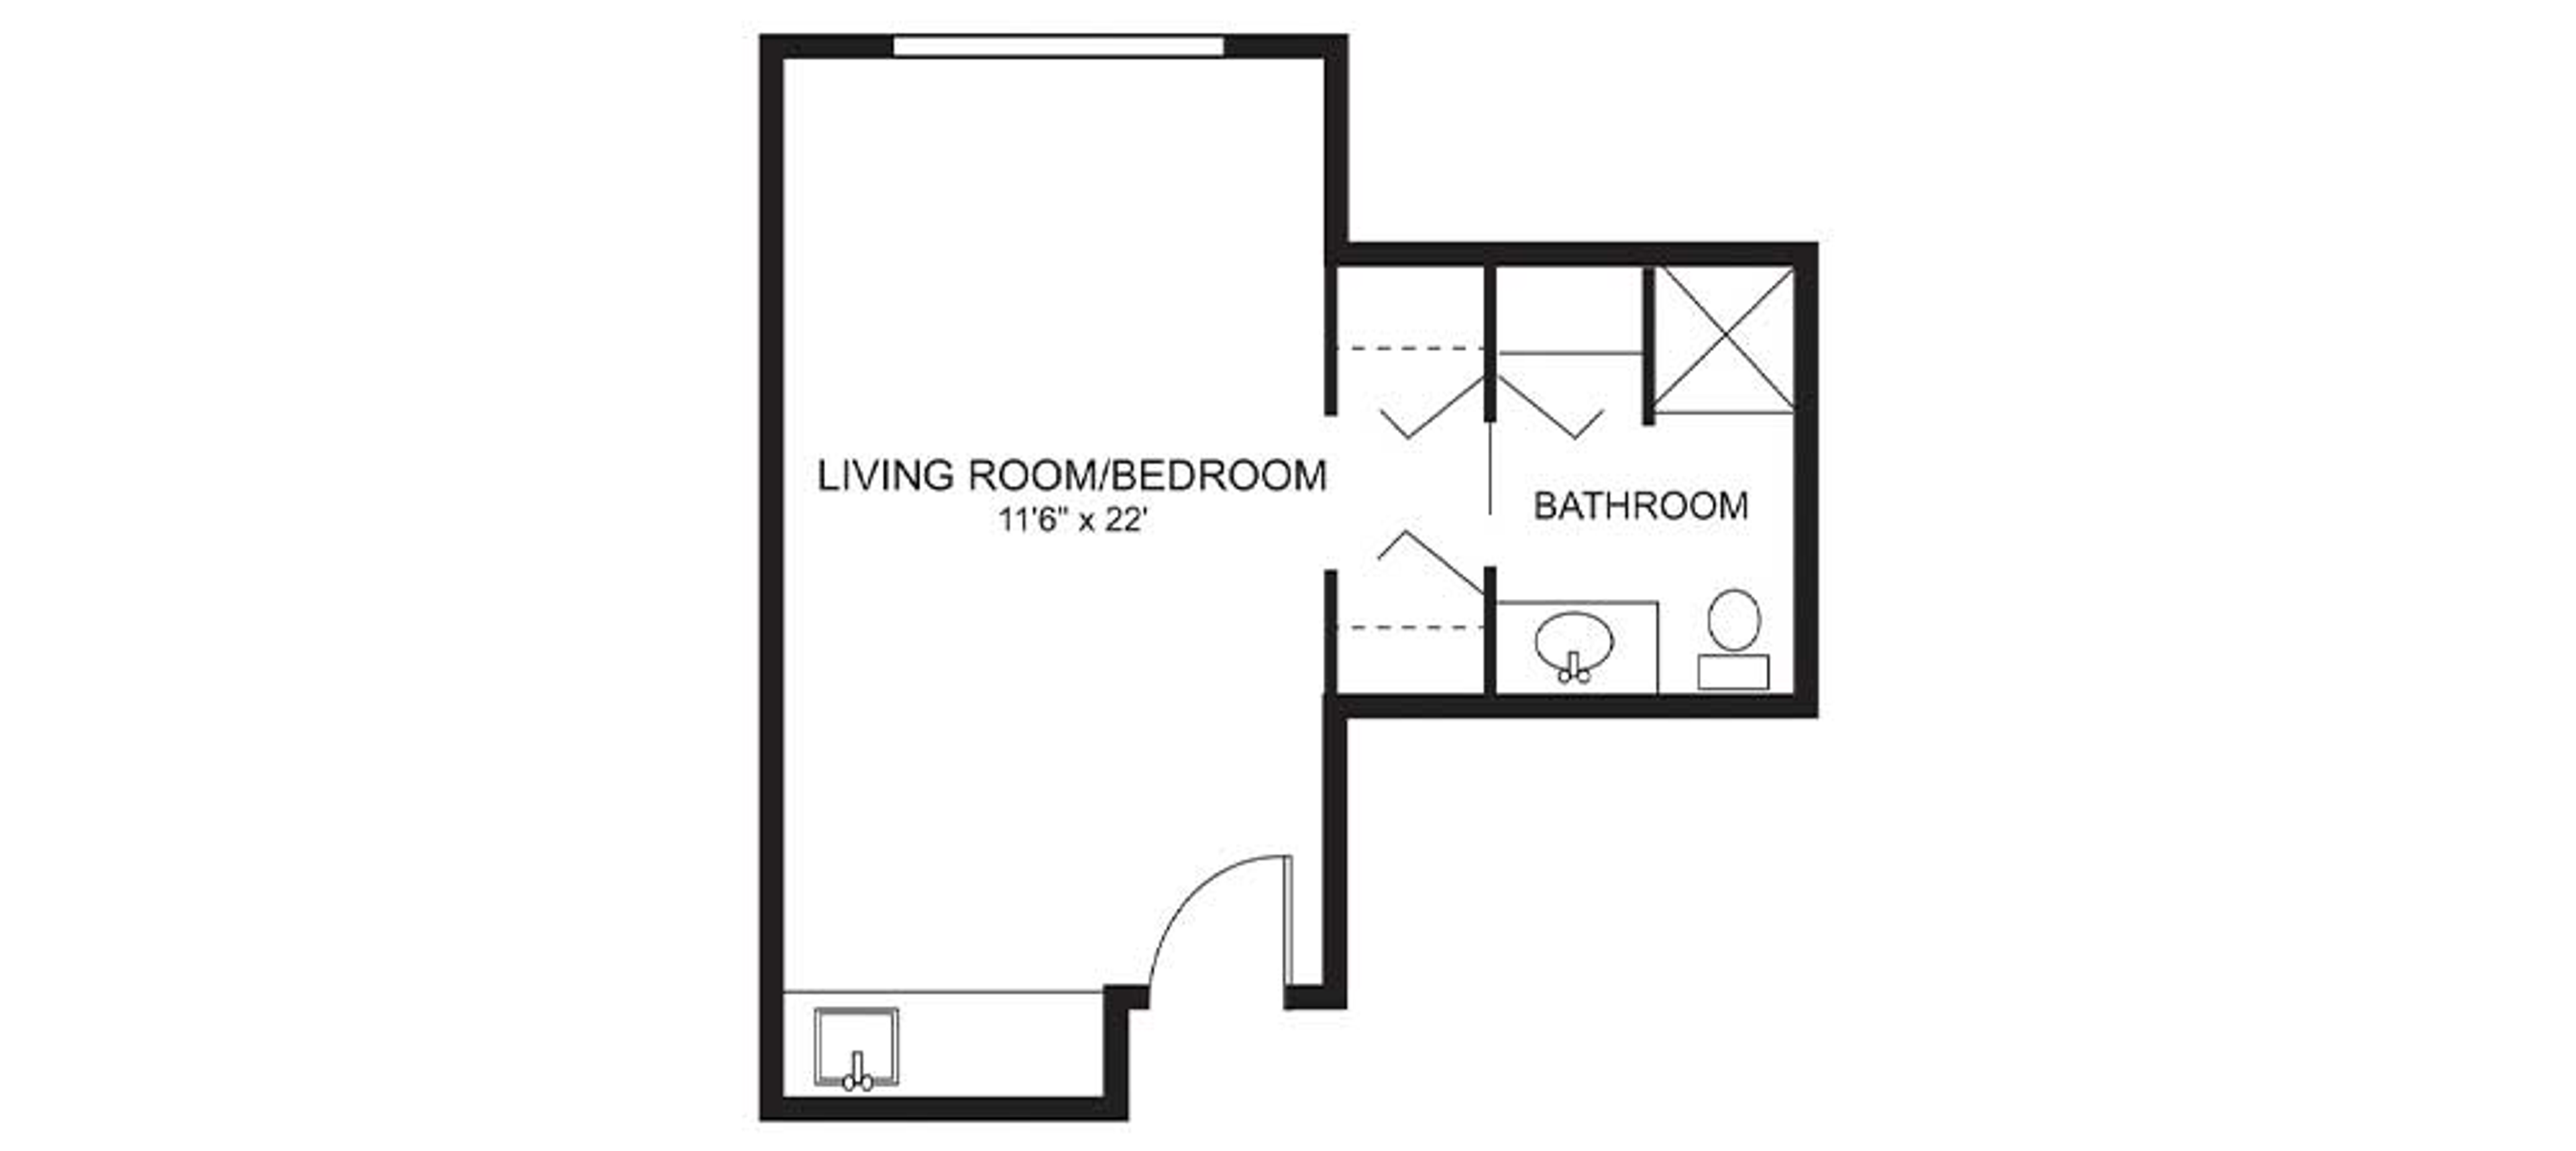 Floorplan - Bay Pointe - Medium Studio 387 sqft Assisted Living 